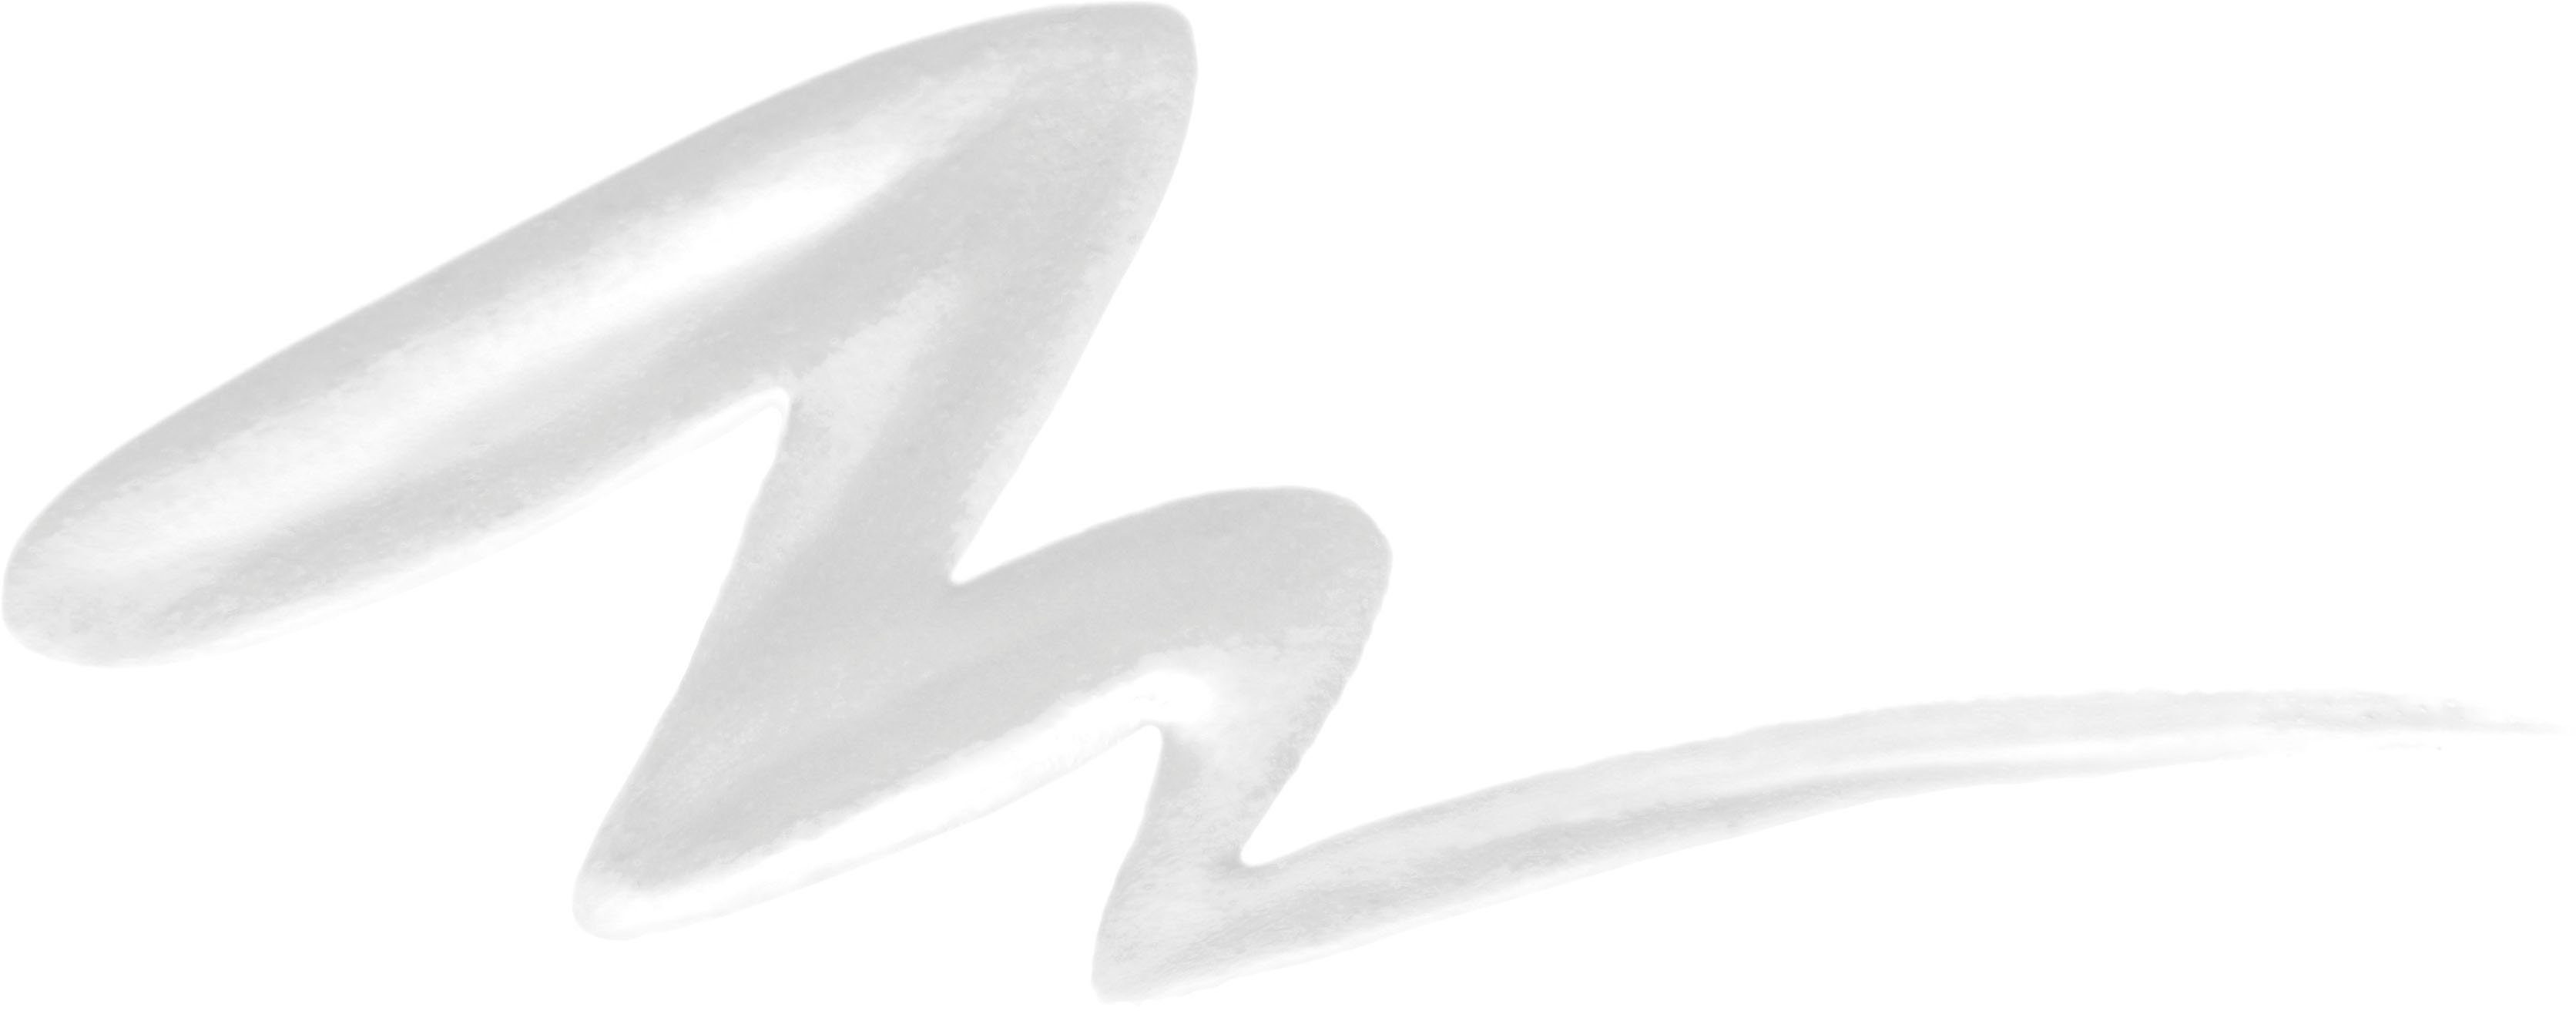 Waterproof Eyeliner White Professional 04 Wear Makeup NYX Liquid Epic Liner,